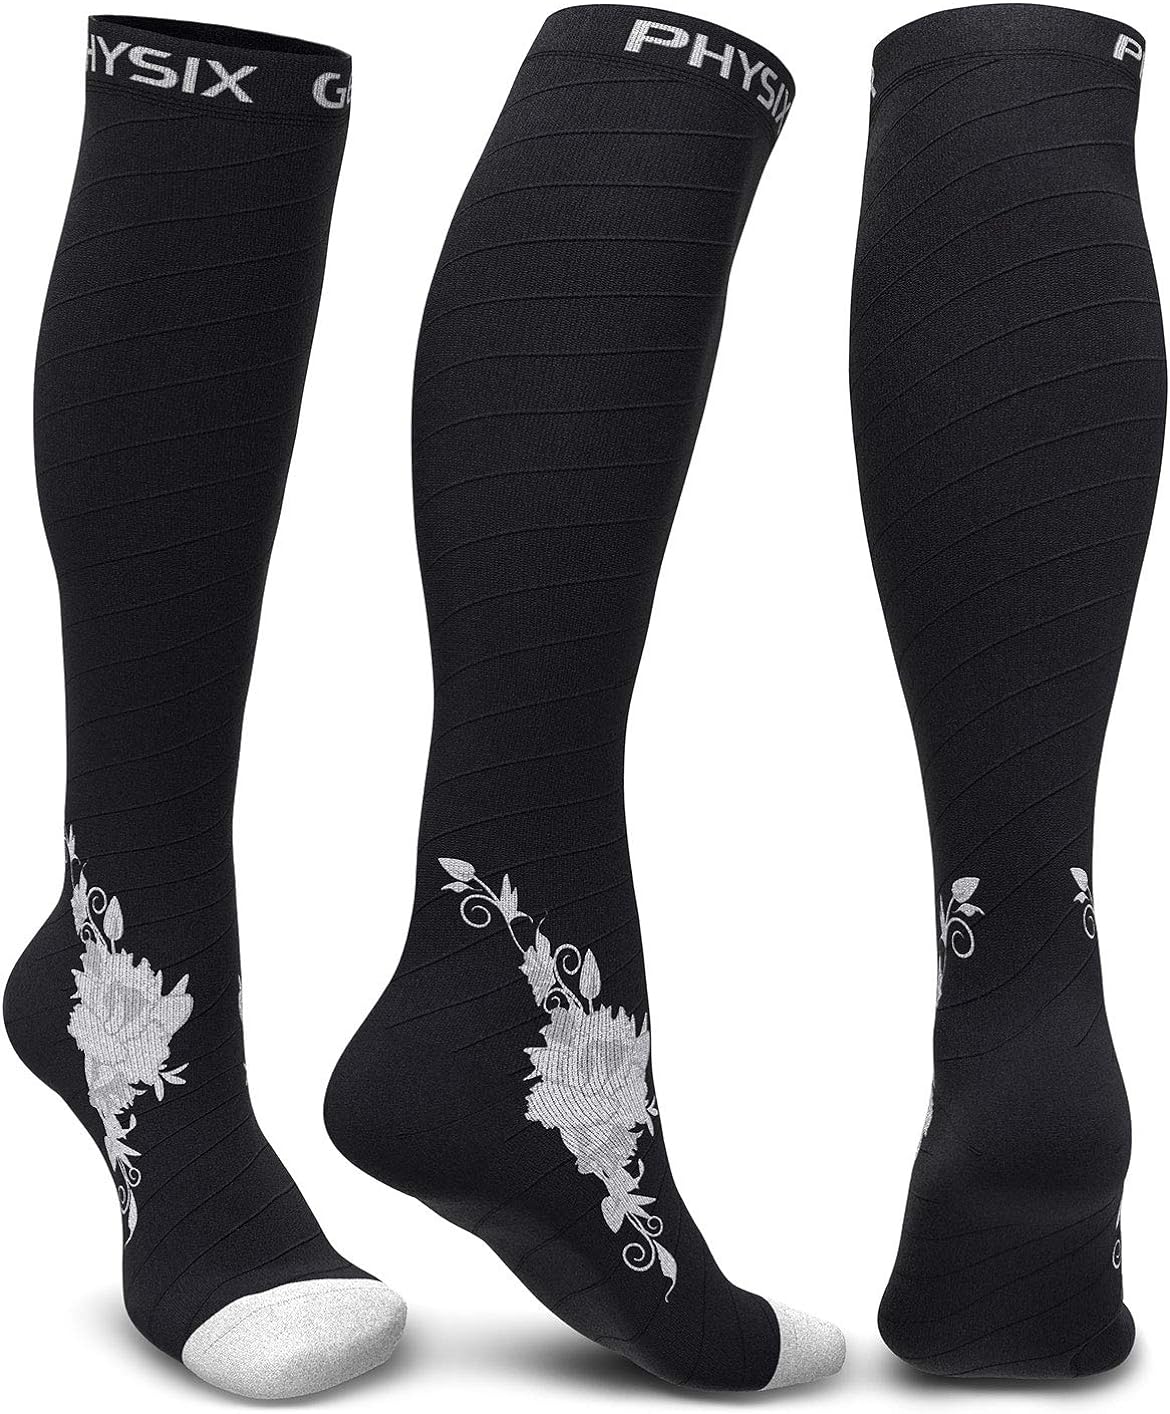 Physix Gear Compression Socks for Men & Women 20-30 mmhg, Best Graduated Athletic Fit for Running Nurses Shin Splints Flight Travel & Maternity Pregnancy - Boost Stamina Circulation - Grey Flower L-XL